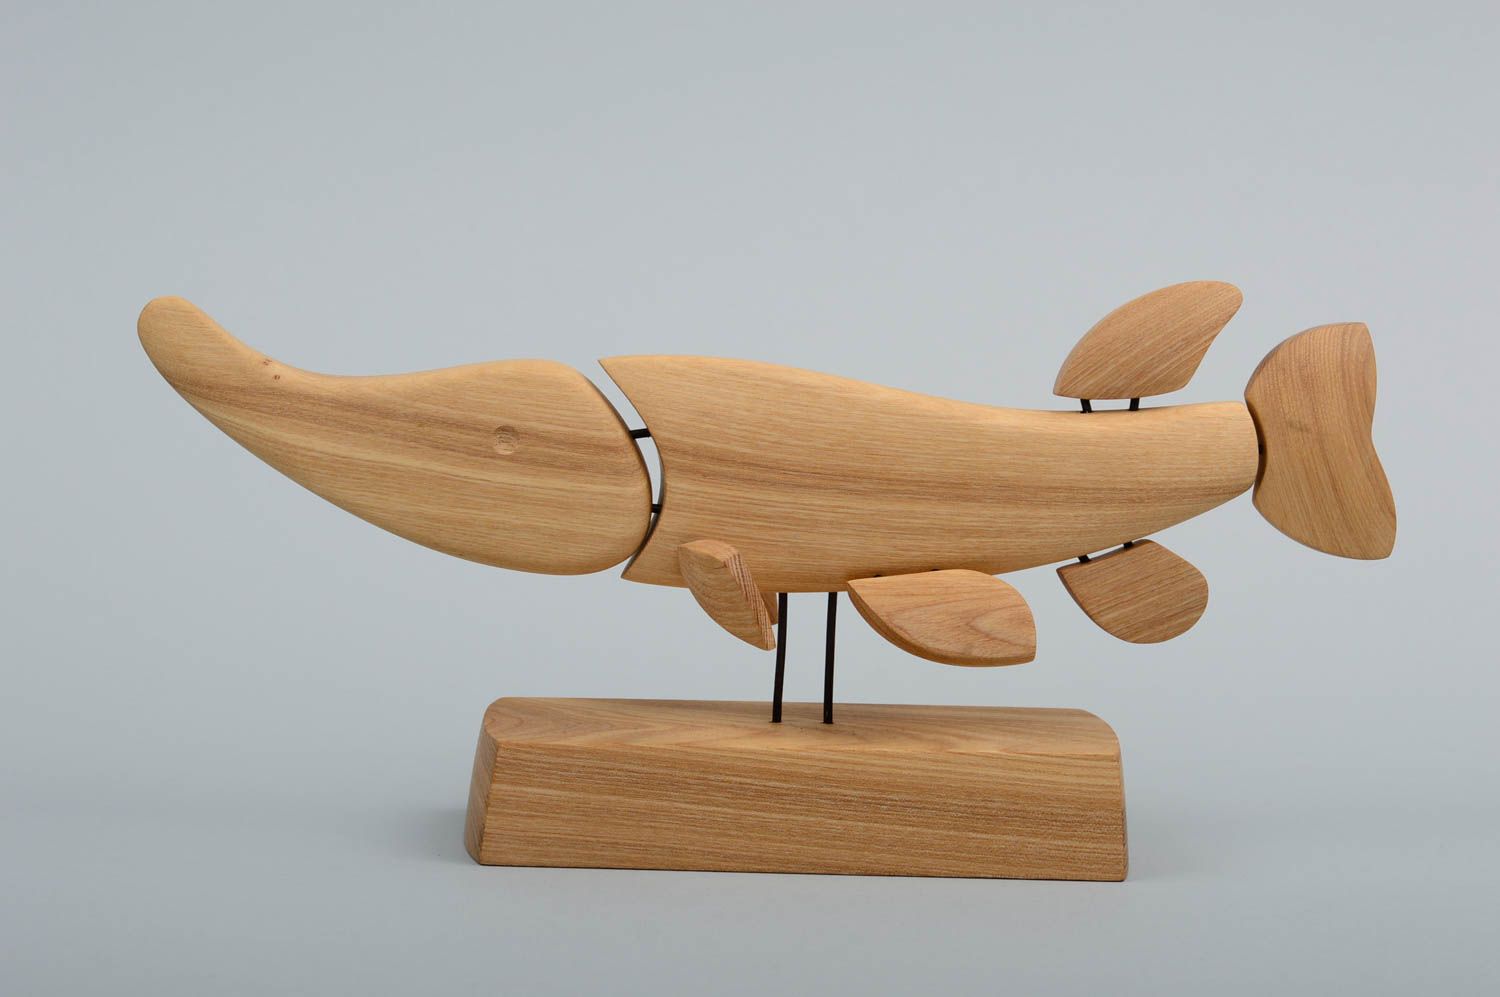 Wooden sculpture wood toy handmade home decor wooden gifts souvenir ideas photo 1